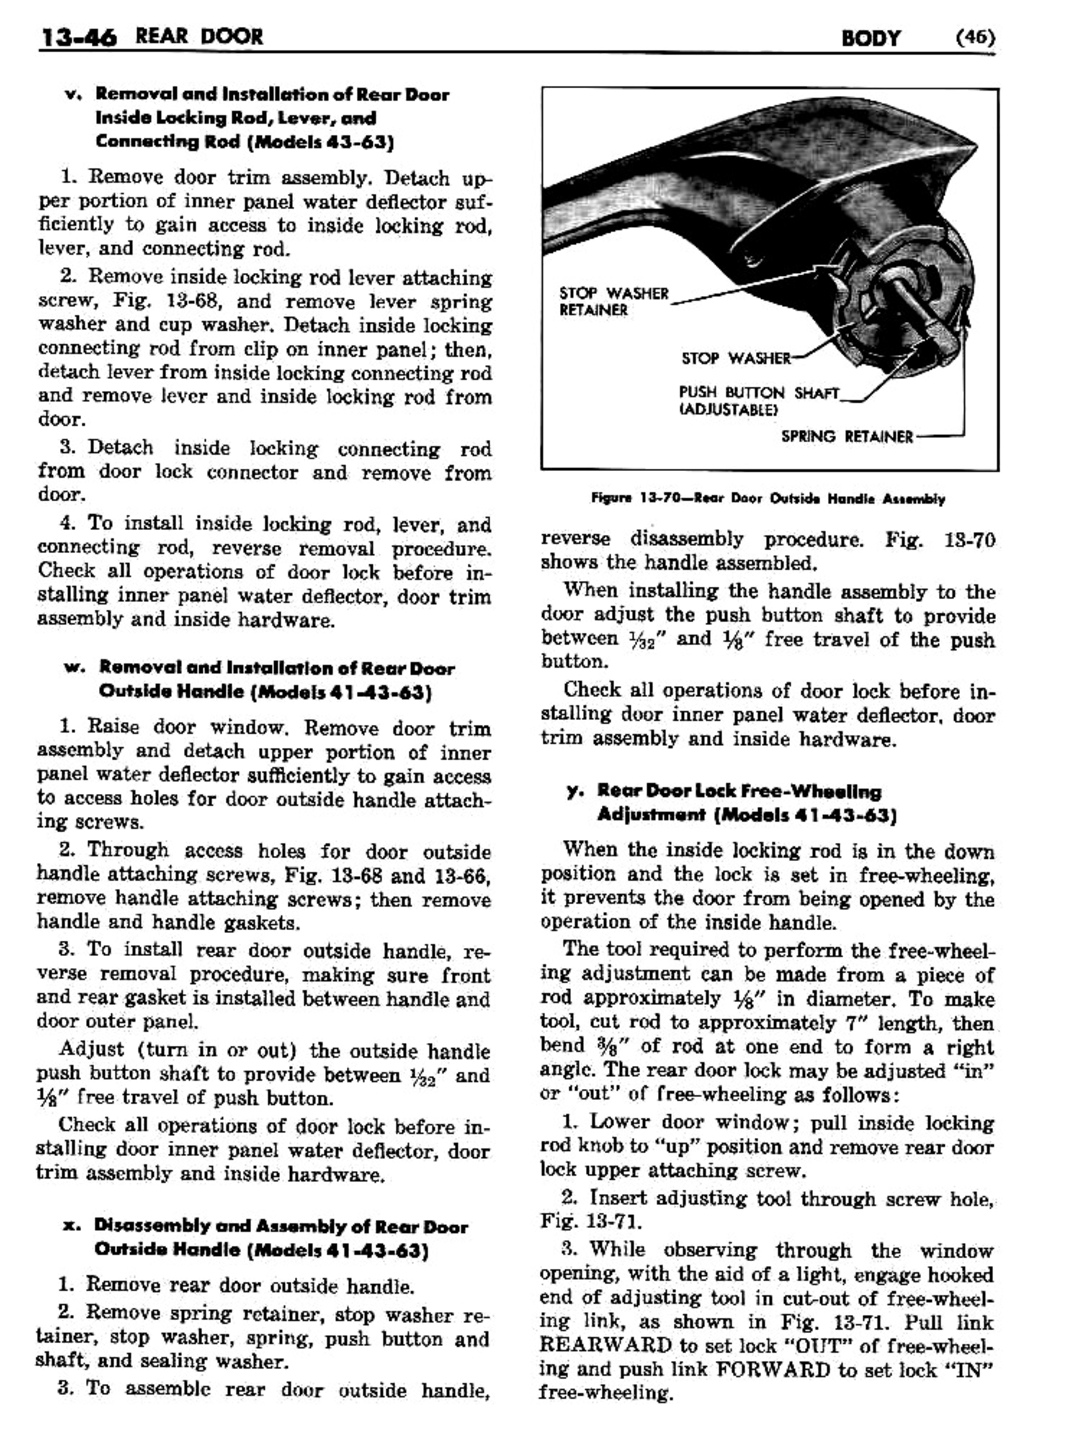 n_1957 Buick Body Service Manual-048-048.jpg